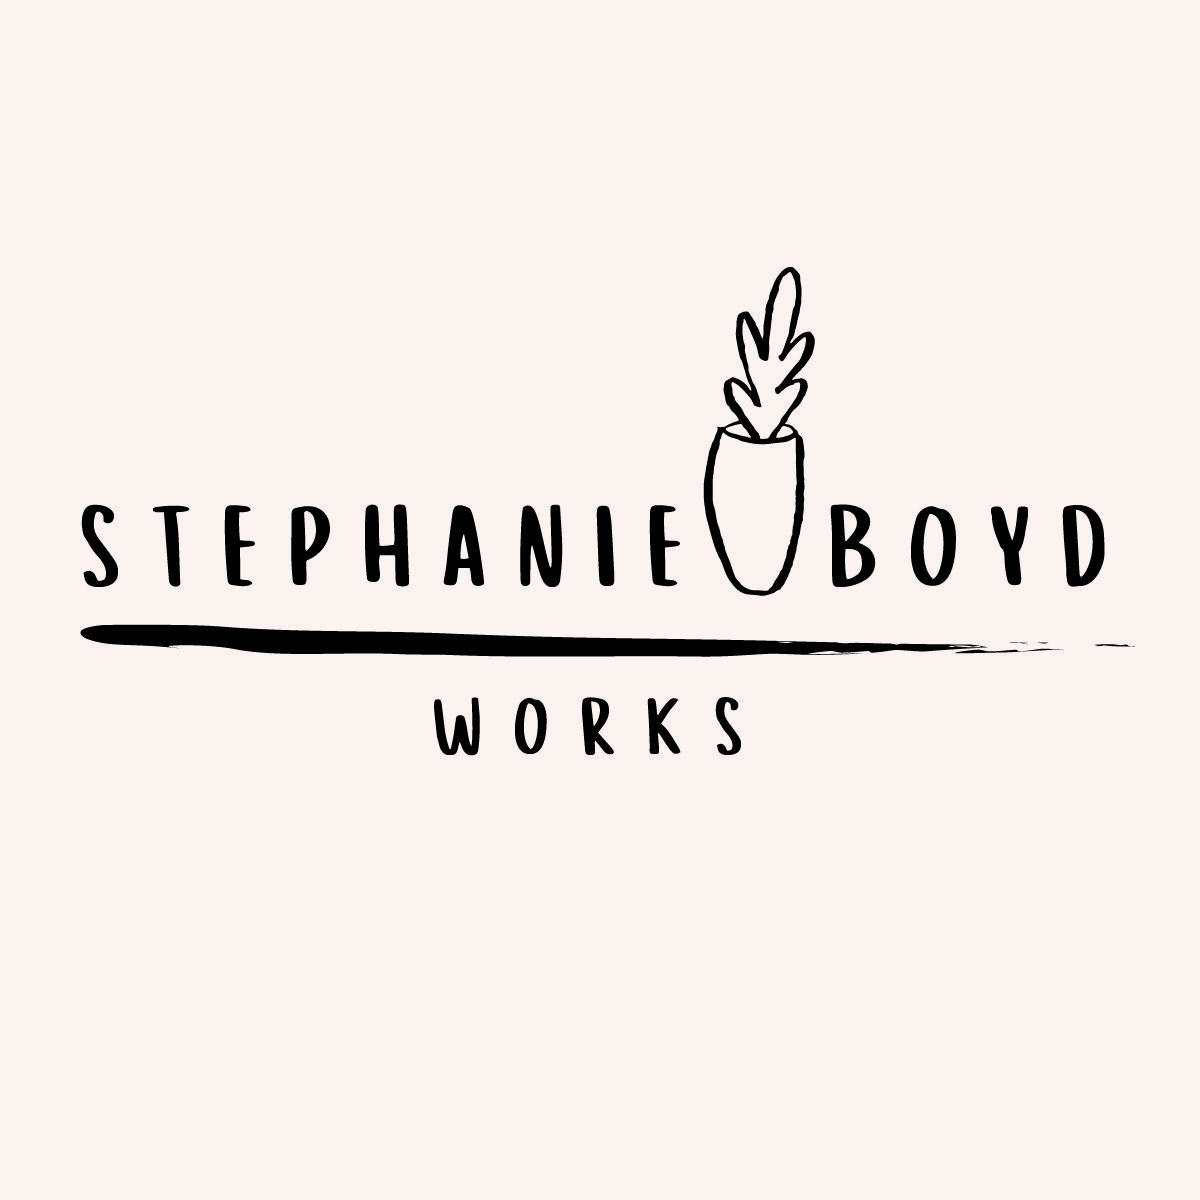 Stephanie Logo - Logo Design: Stephanie Boyd Works